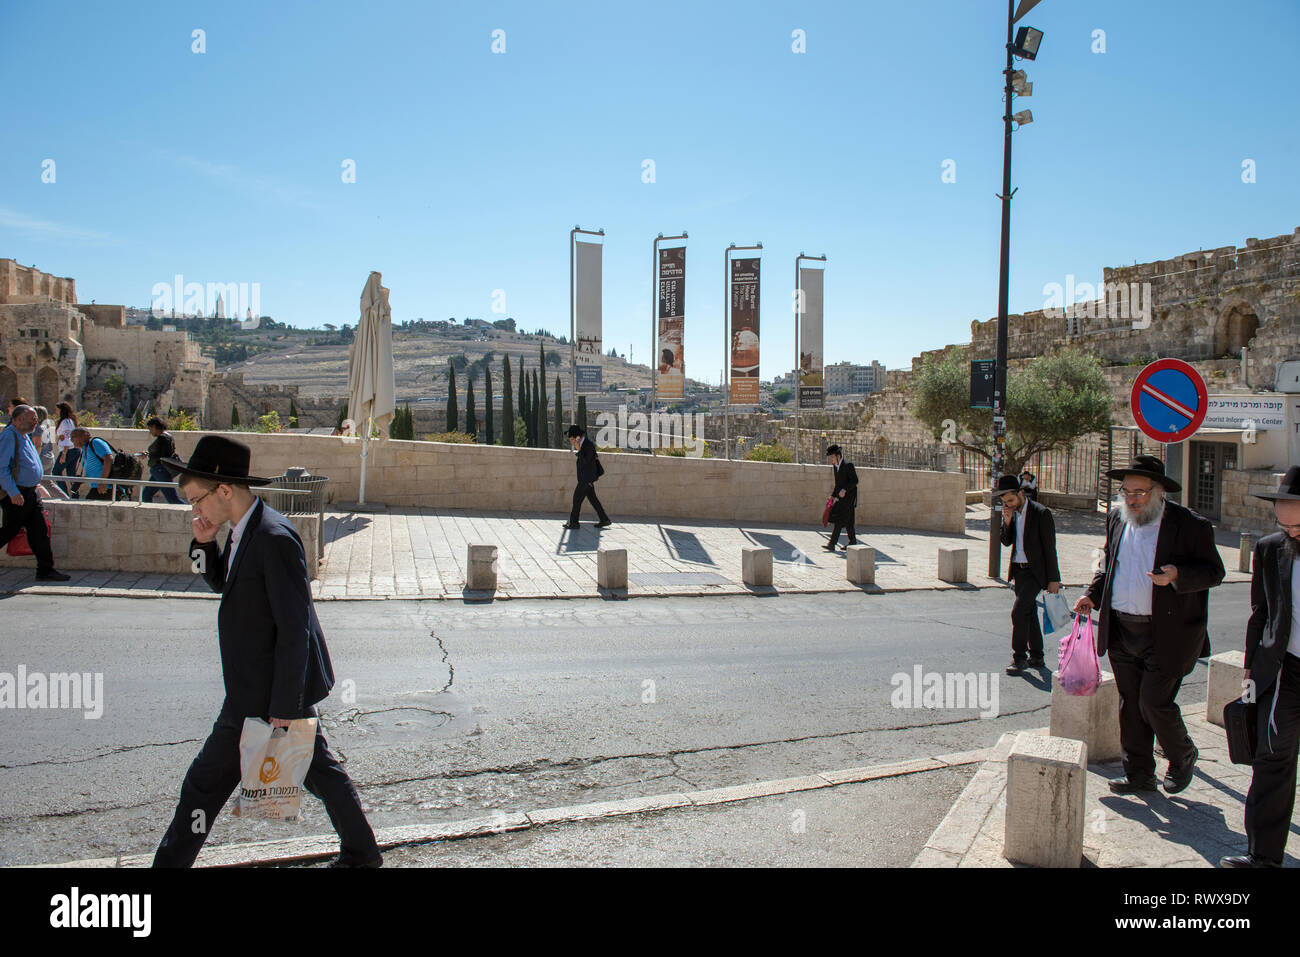 JERUSALEM, ISRAEL - MAY 16, 2018: Haredi ultra orthodox Jews walking on strees of Jerusalem, Mount  of Olives in the background Stock Photo